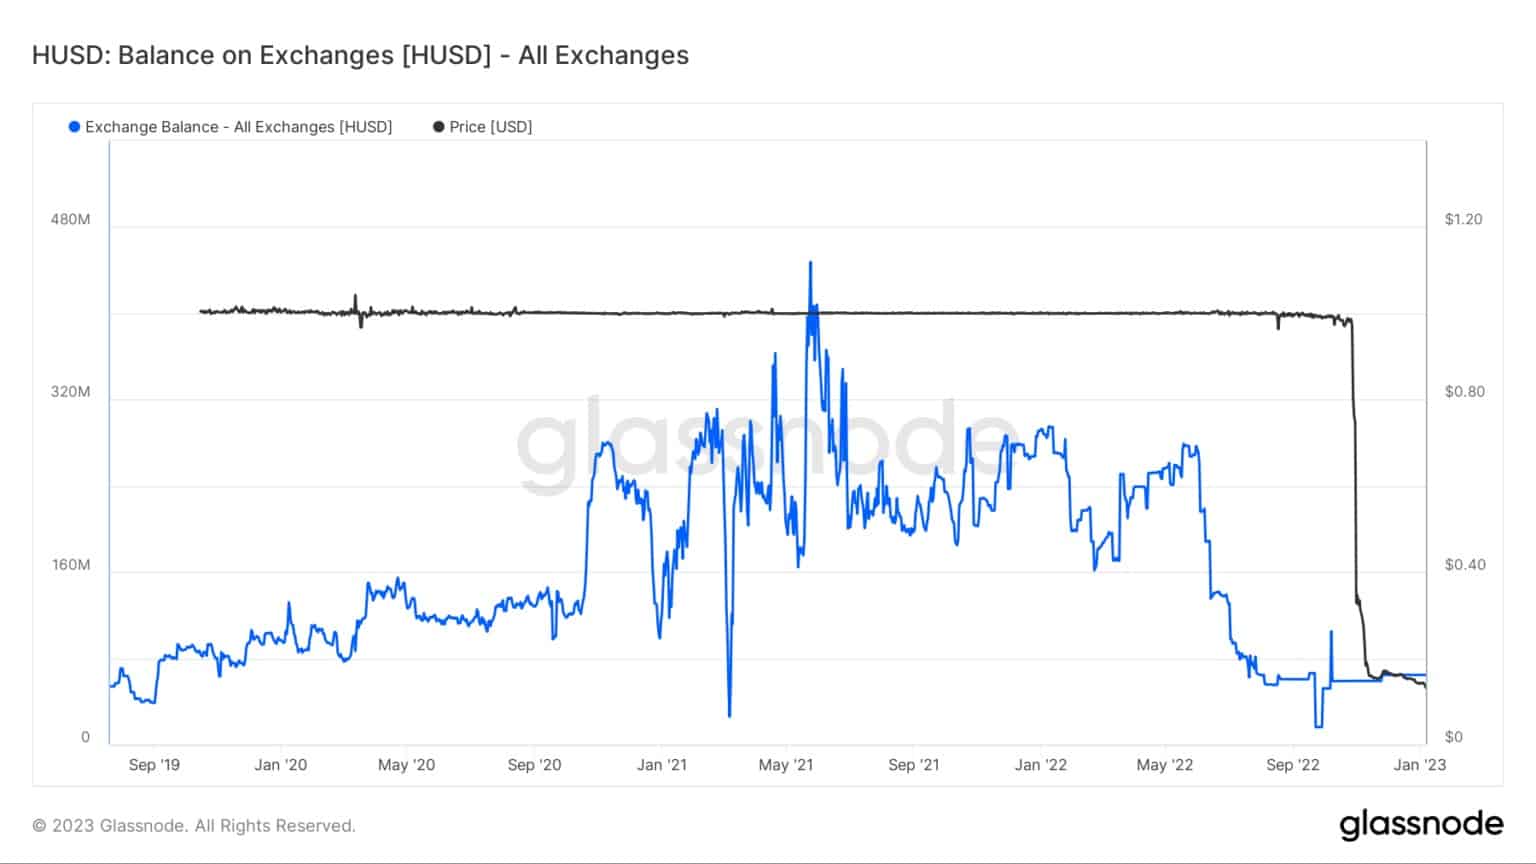 HUSD balances on exchanges (Source: Glassnode)